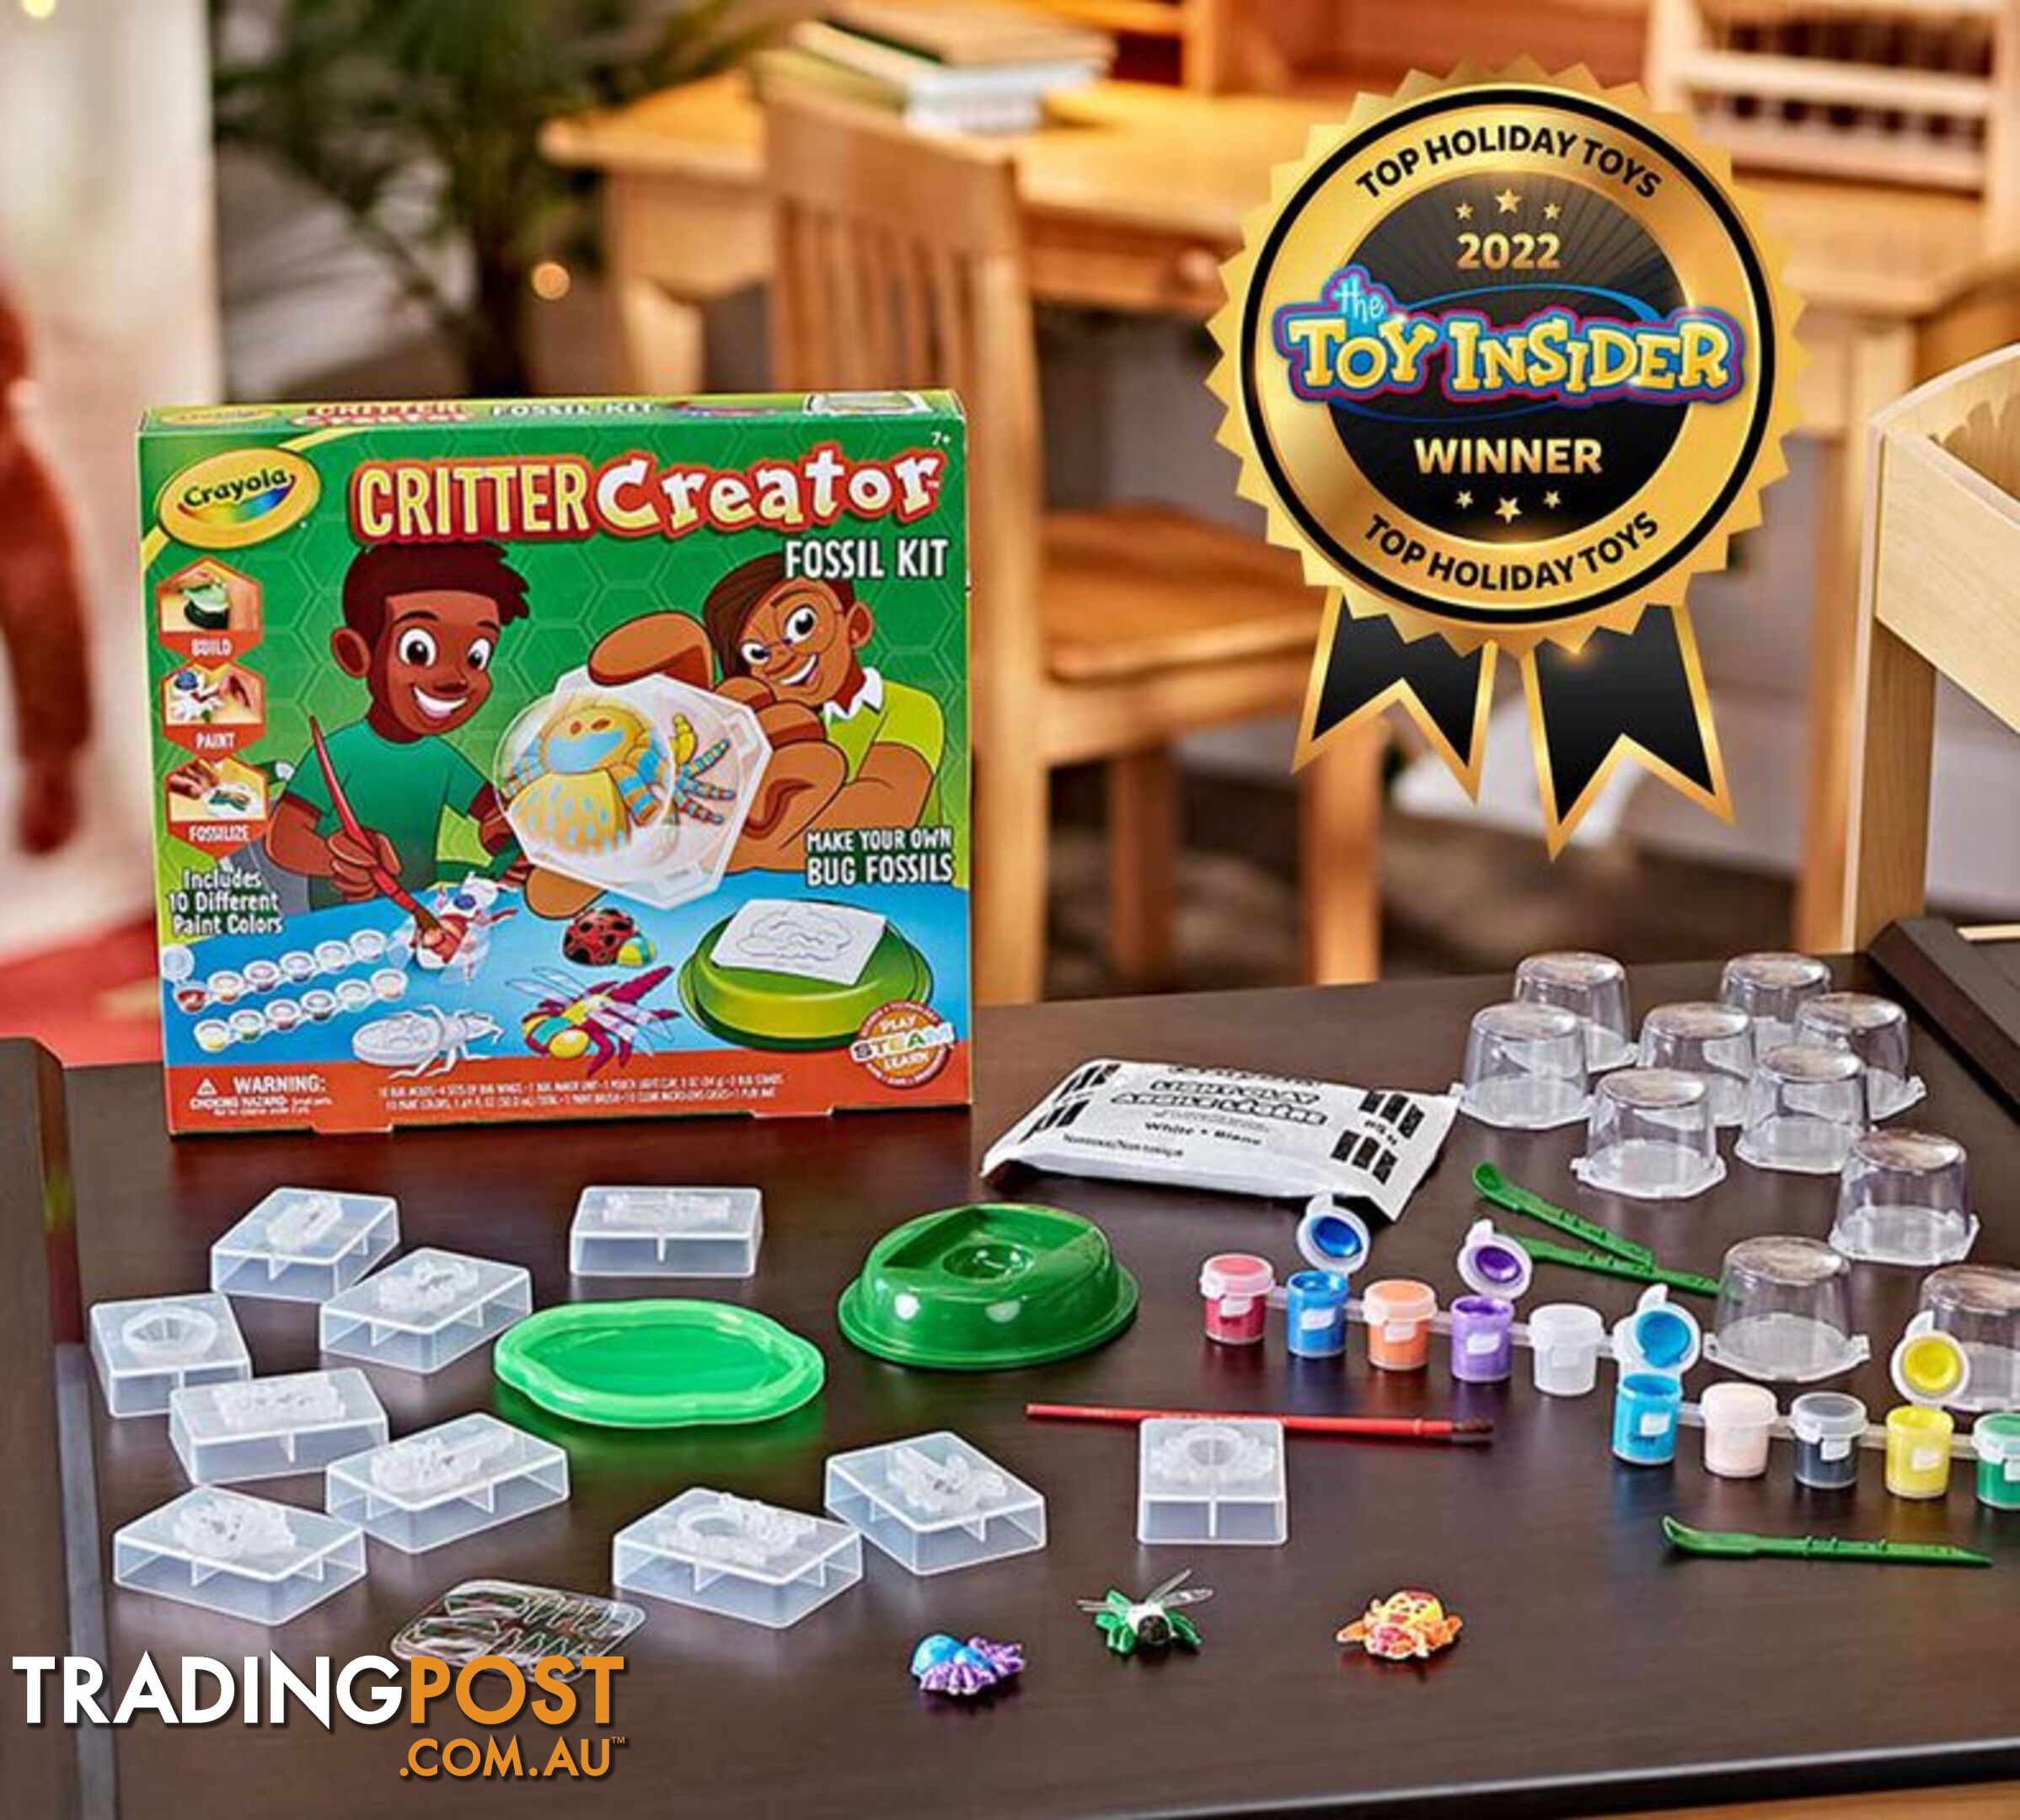 Critter Creator Metallic Bug Fossil Kit for Kids - Bs747495 - 71662074951